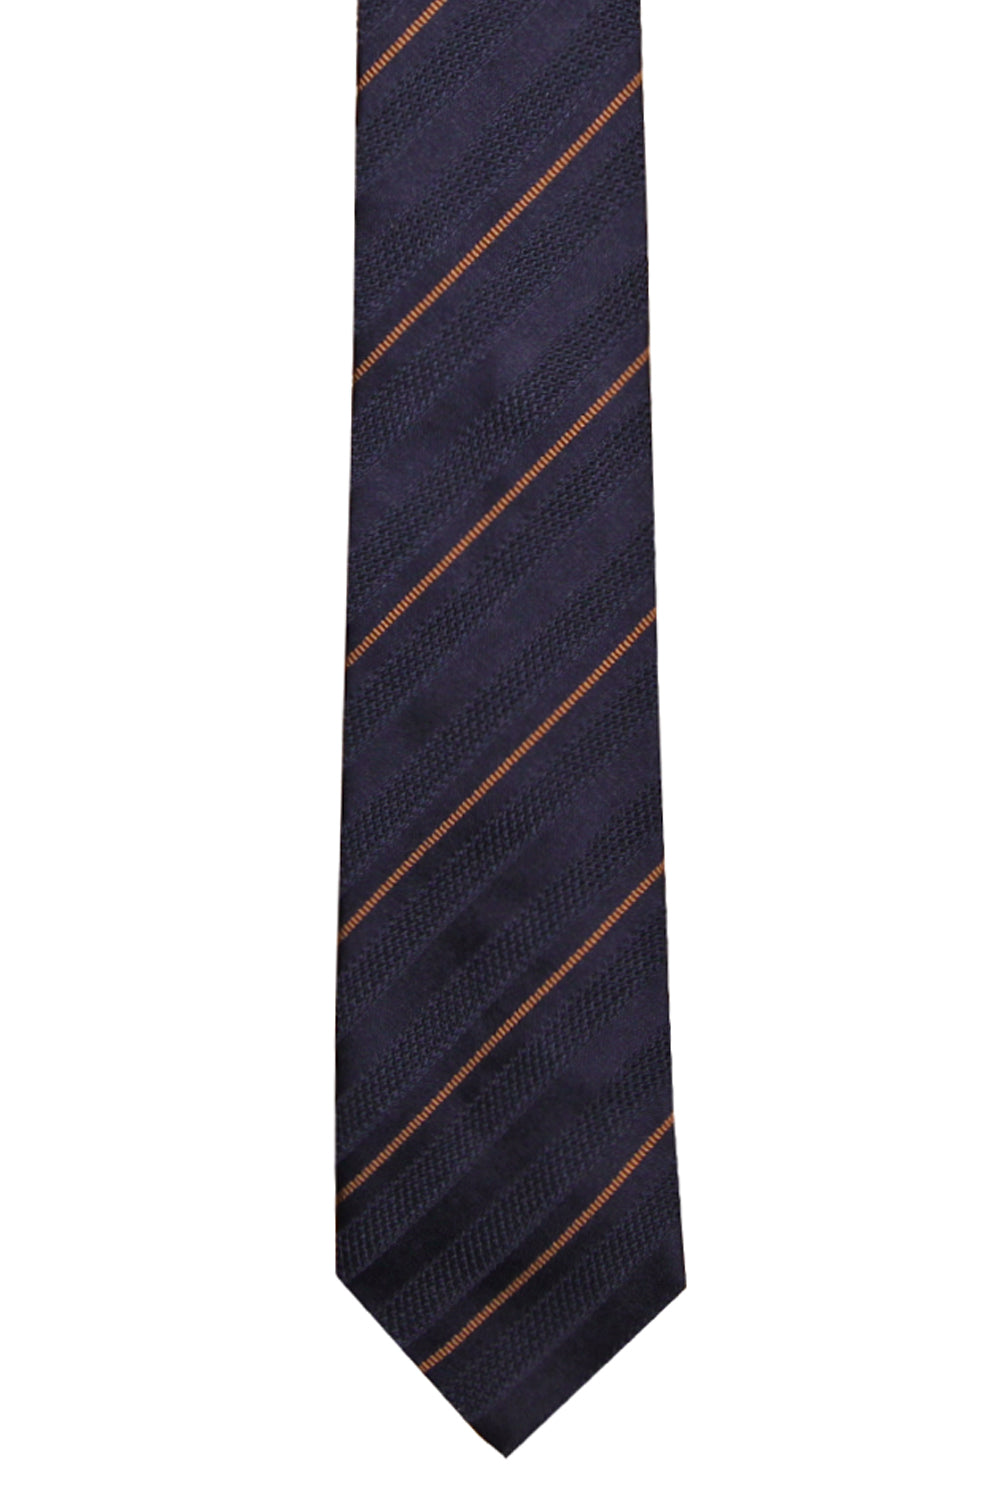 CHURCH'S Cravatta in seta